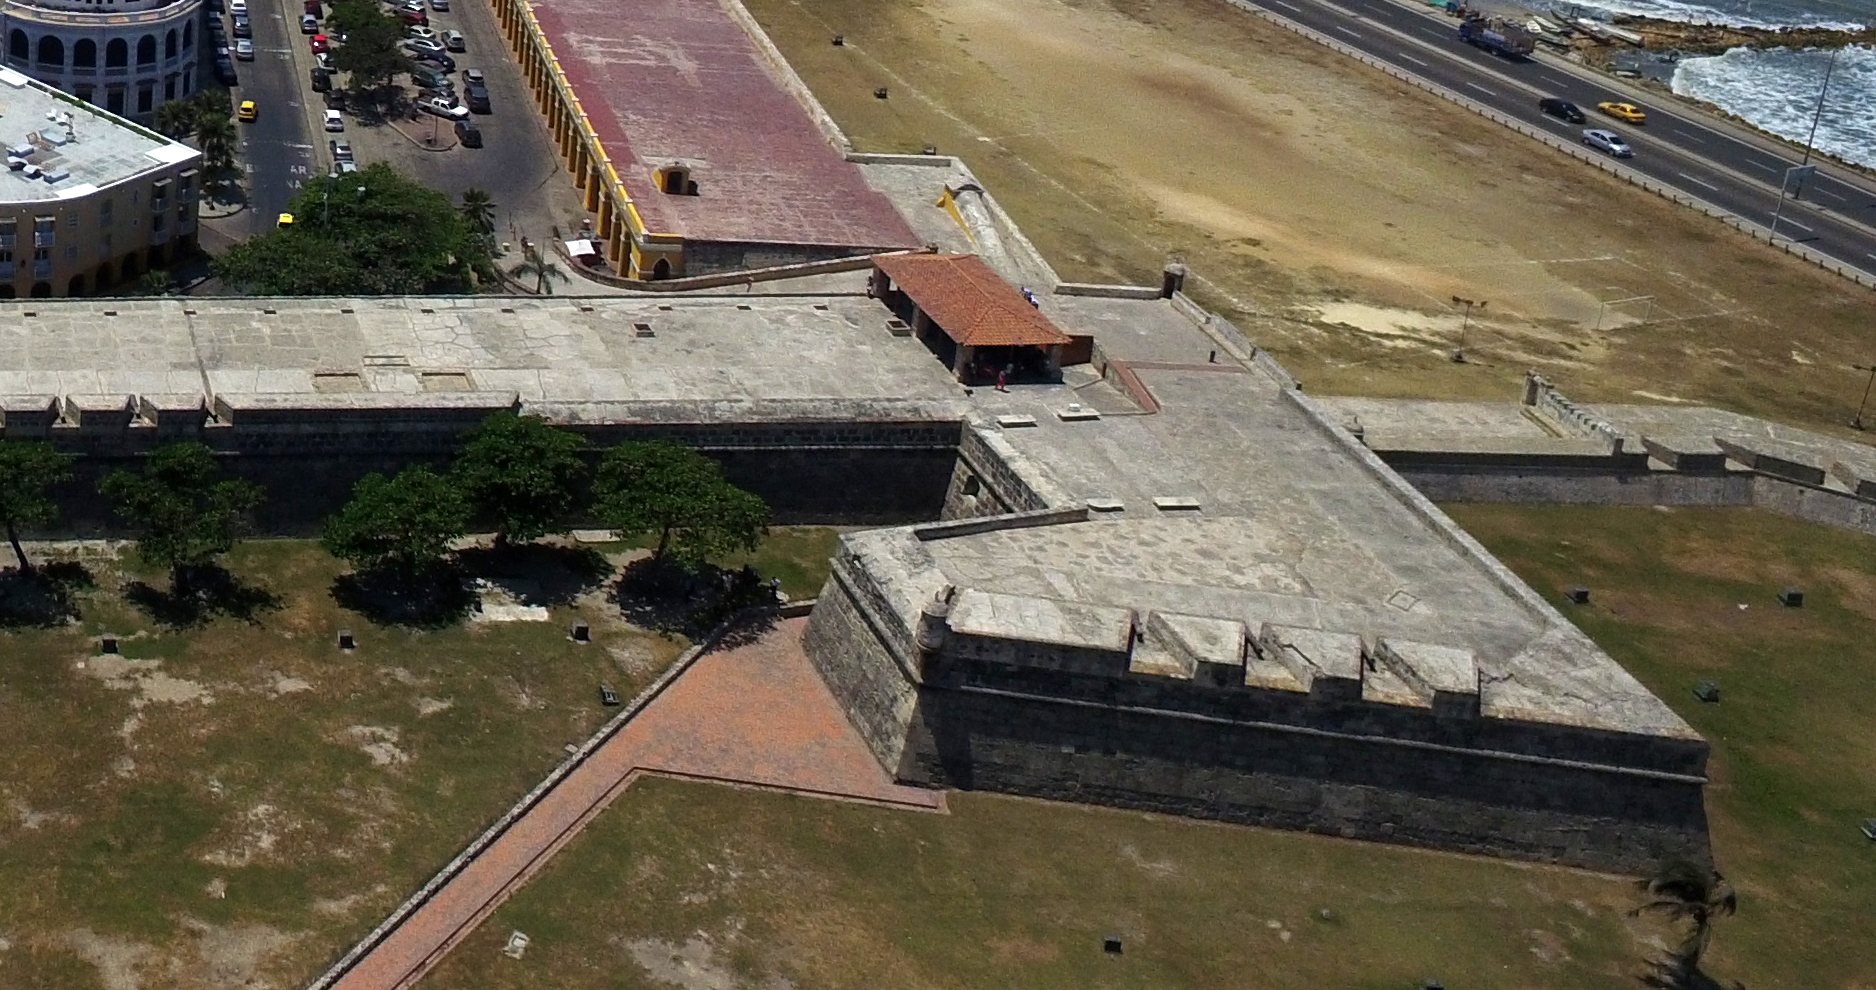 Se abre convocatoria para intervenir artísticamente Baluarte de Santa Catalina, en Cartagena